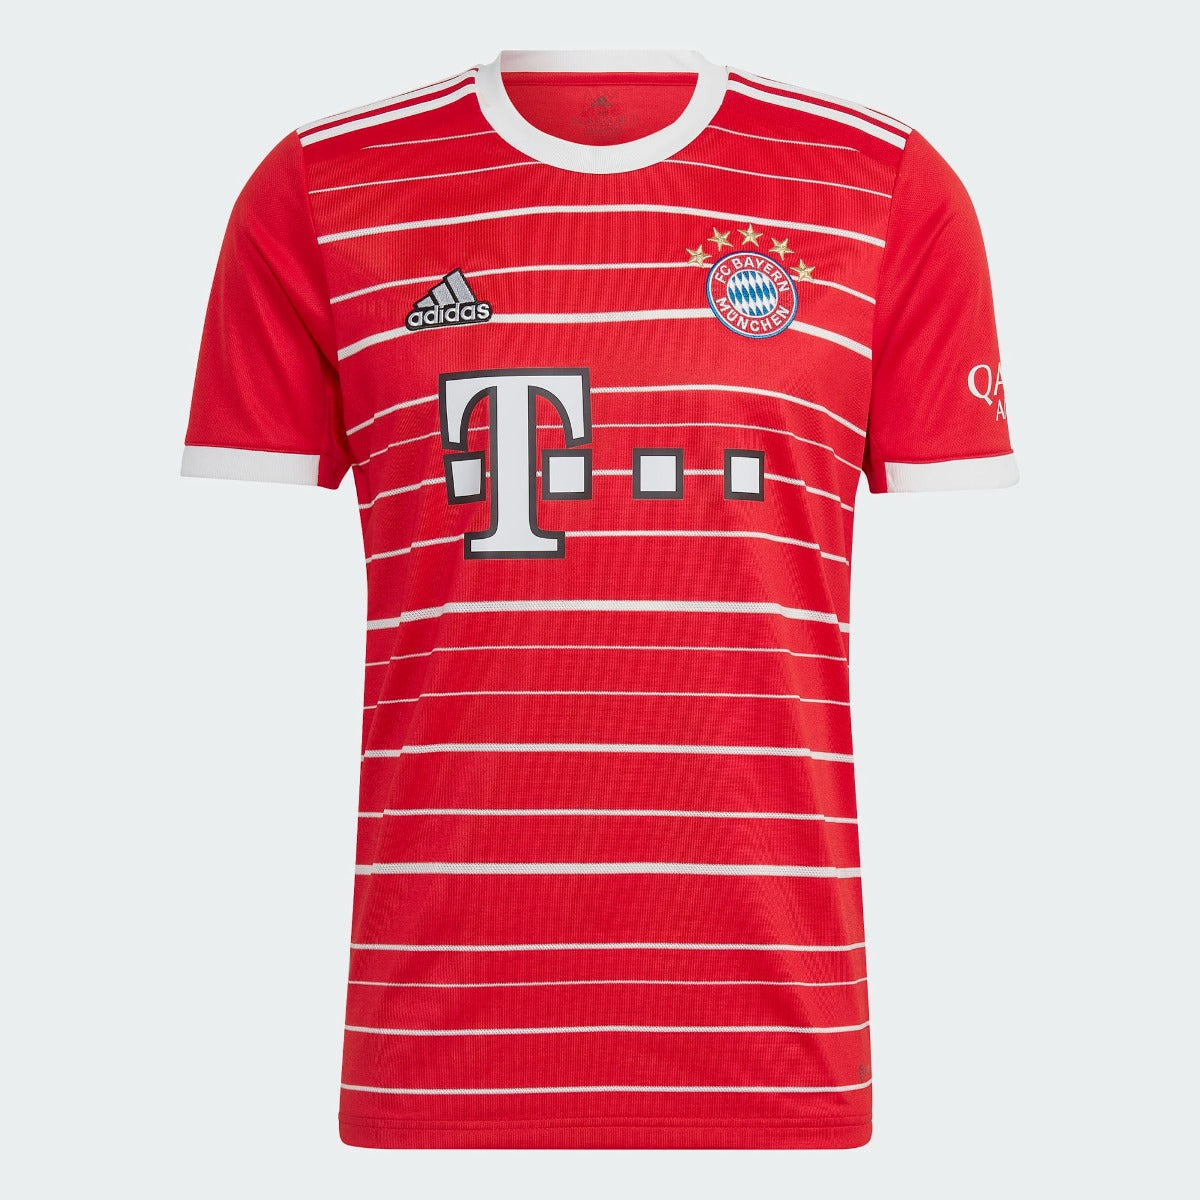 adidas 22-23 Bayern Munich Home Jersey - Red-White (Front)